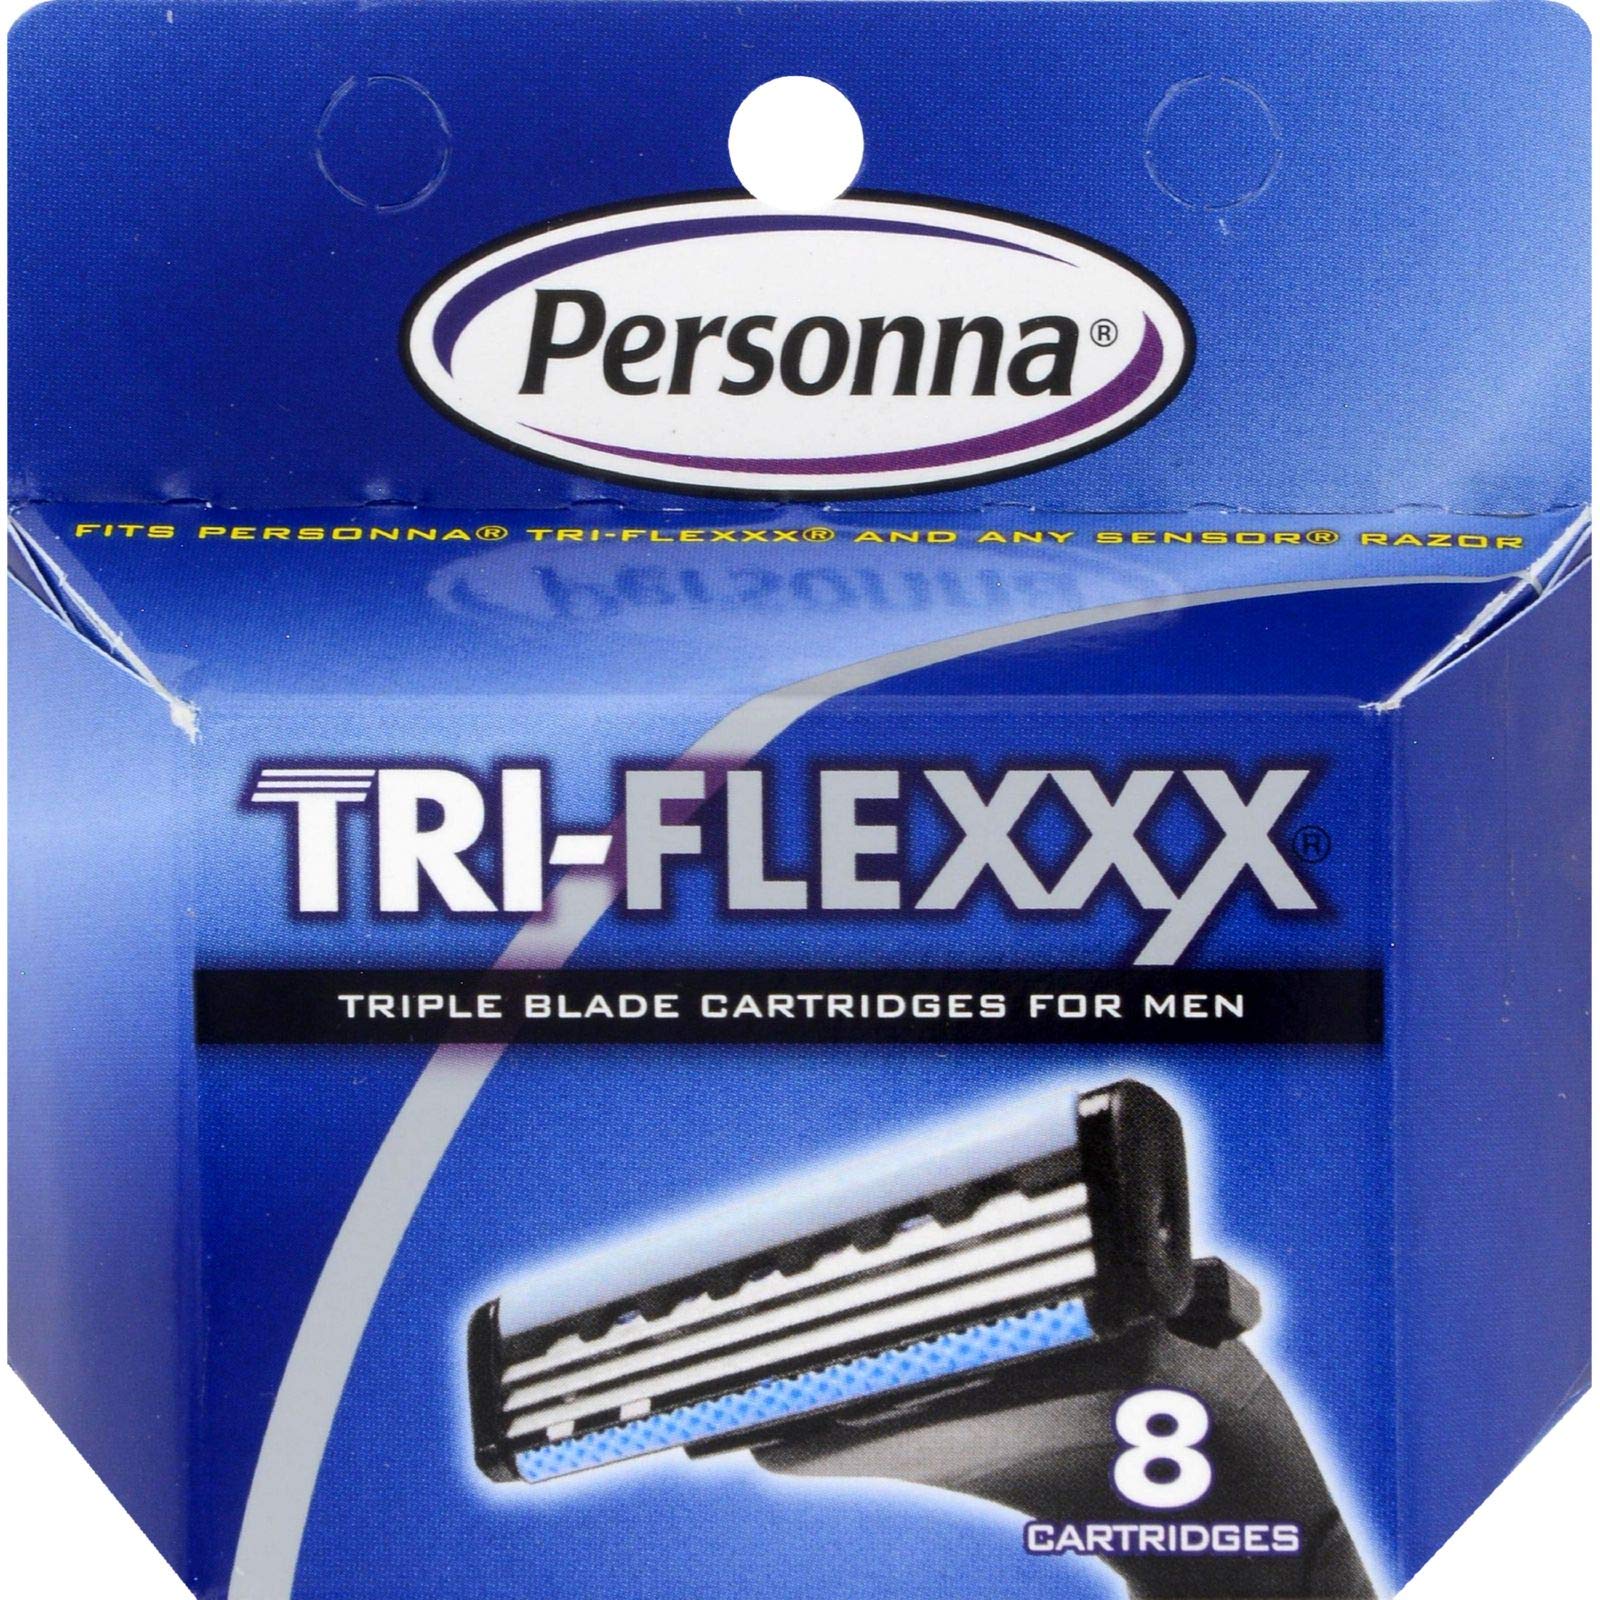 Tri-flexxx Cartridges - For all Gillette Sensor and Personna Tri-flexxx Razors - 8 Ea